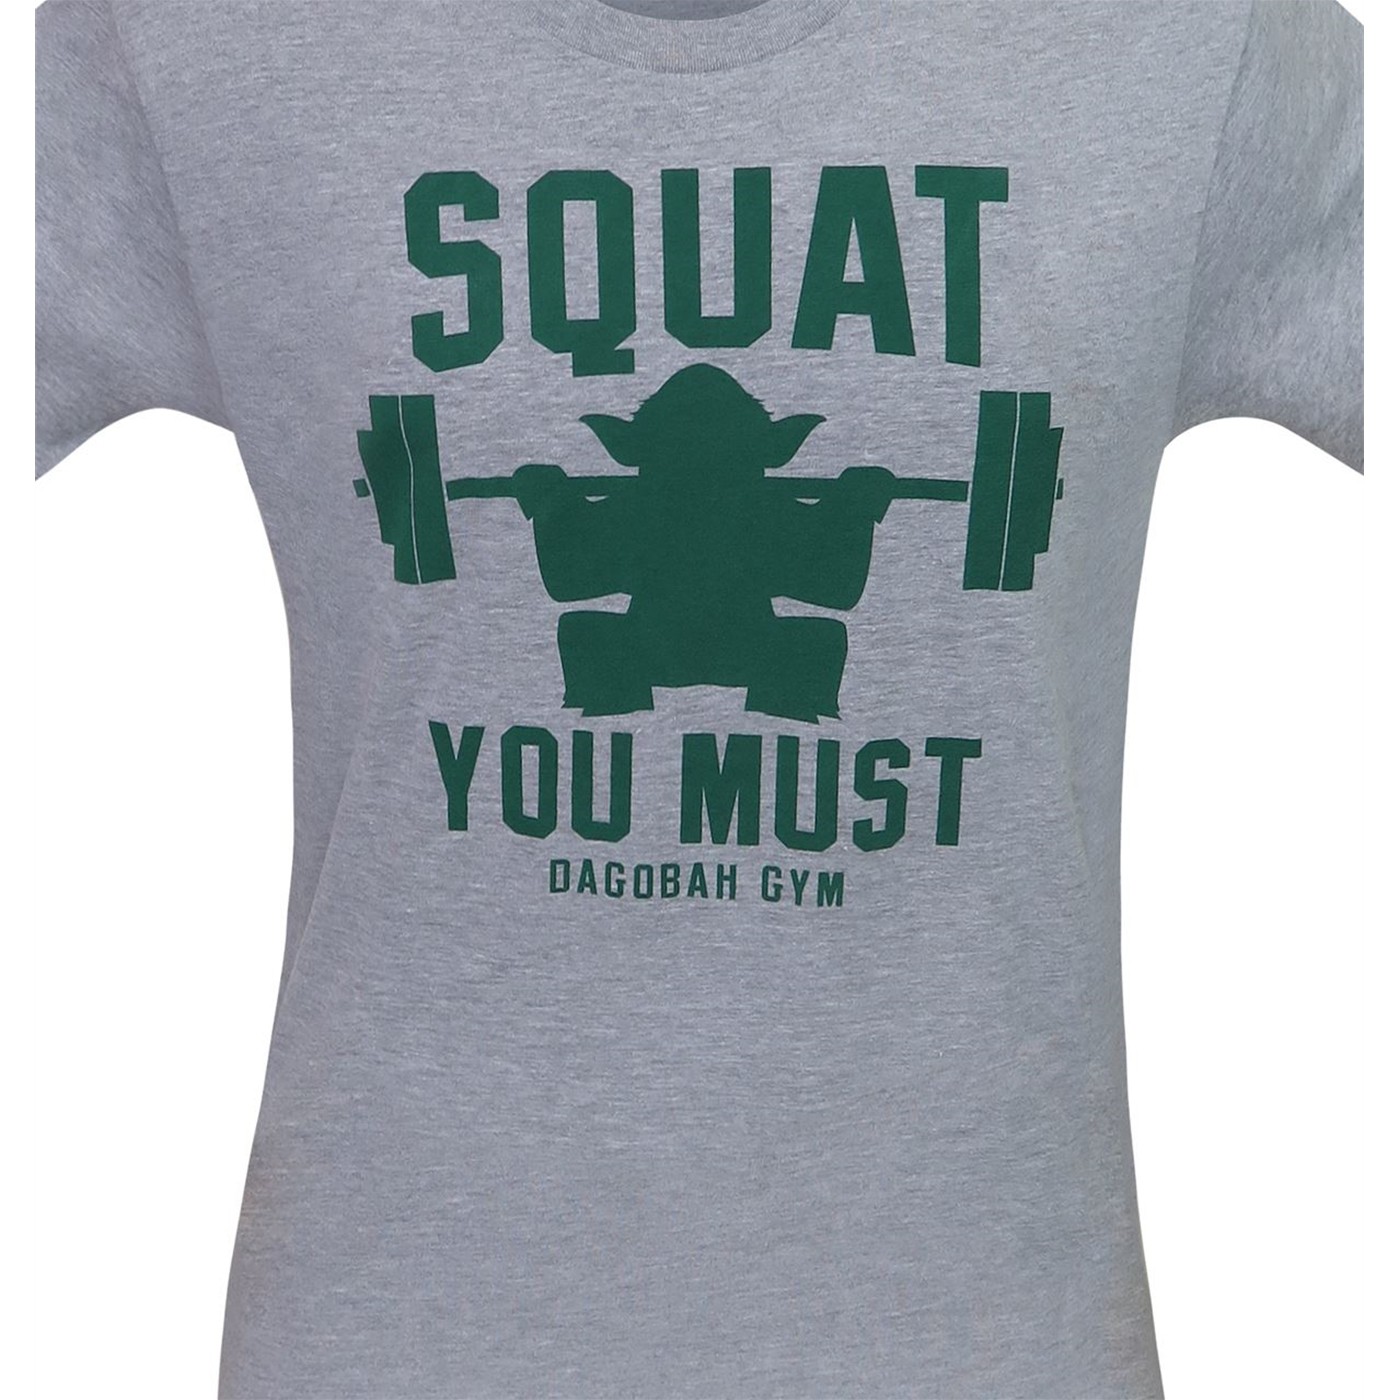 Squat You Must Men's T-Shirt